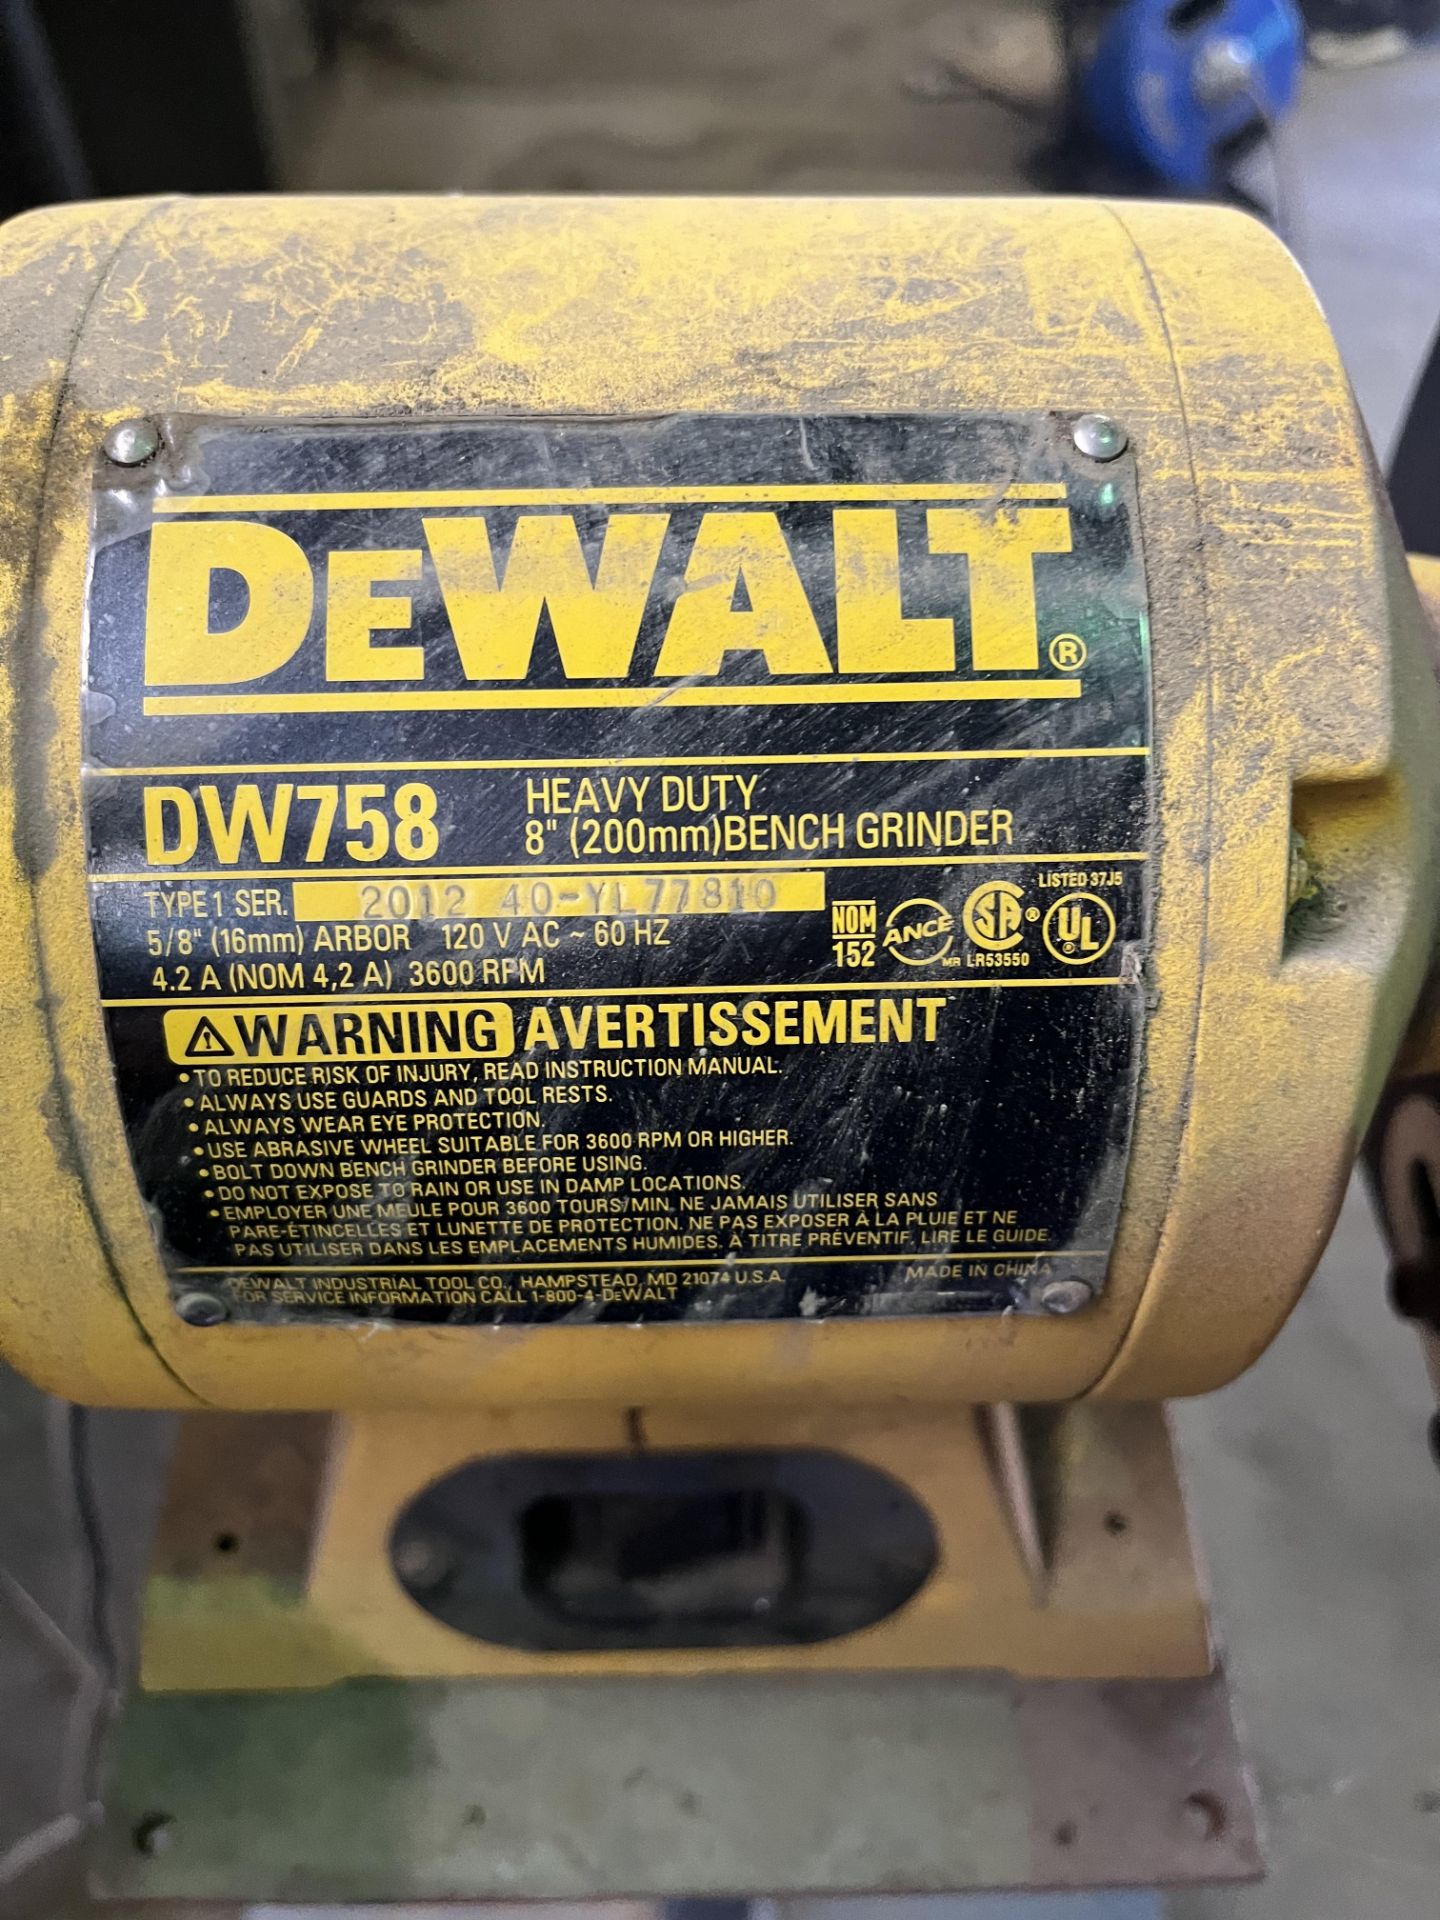 DeWALT DW758 Heavy Duty Bench Grinder - Image 2 of 4